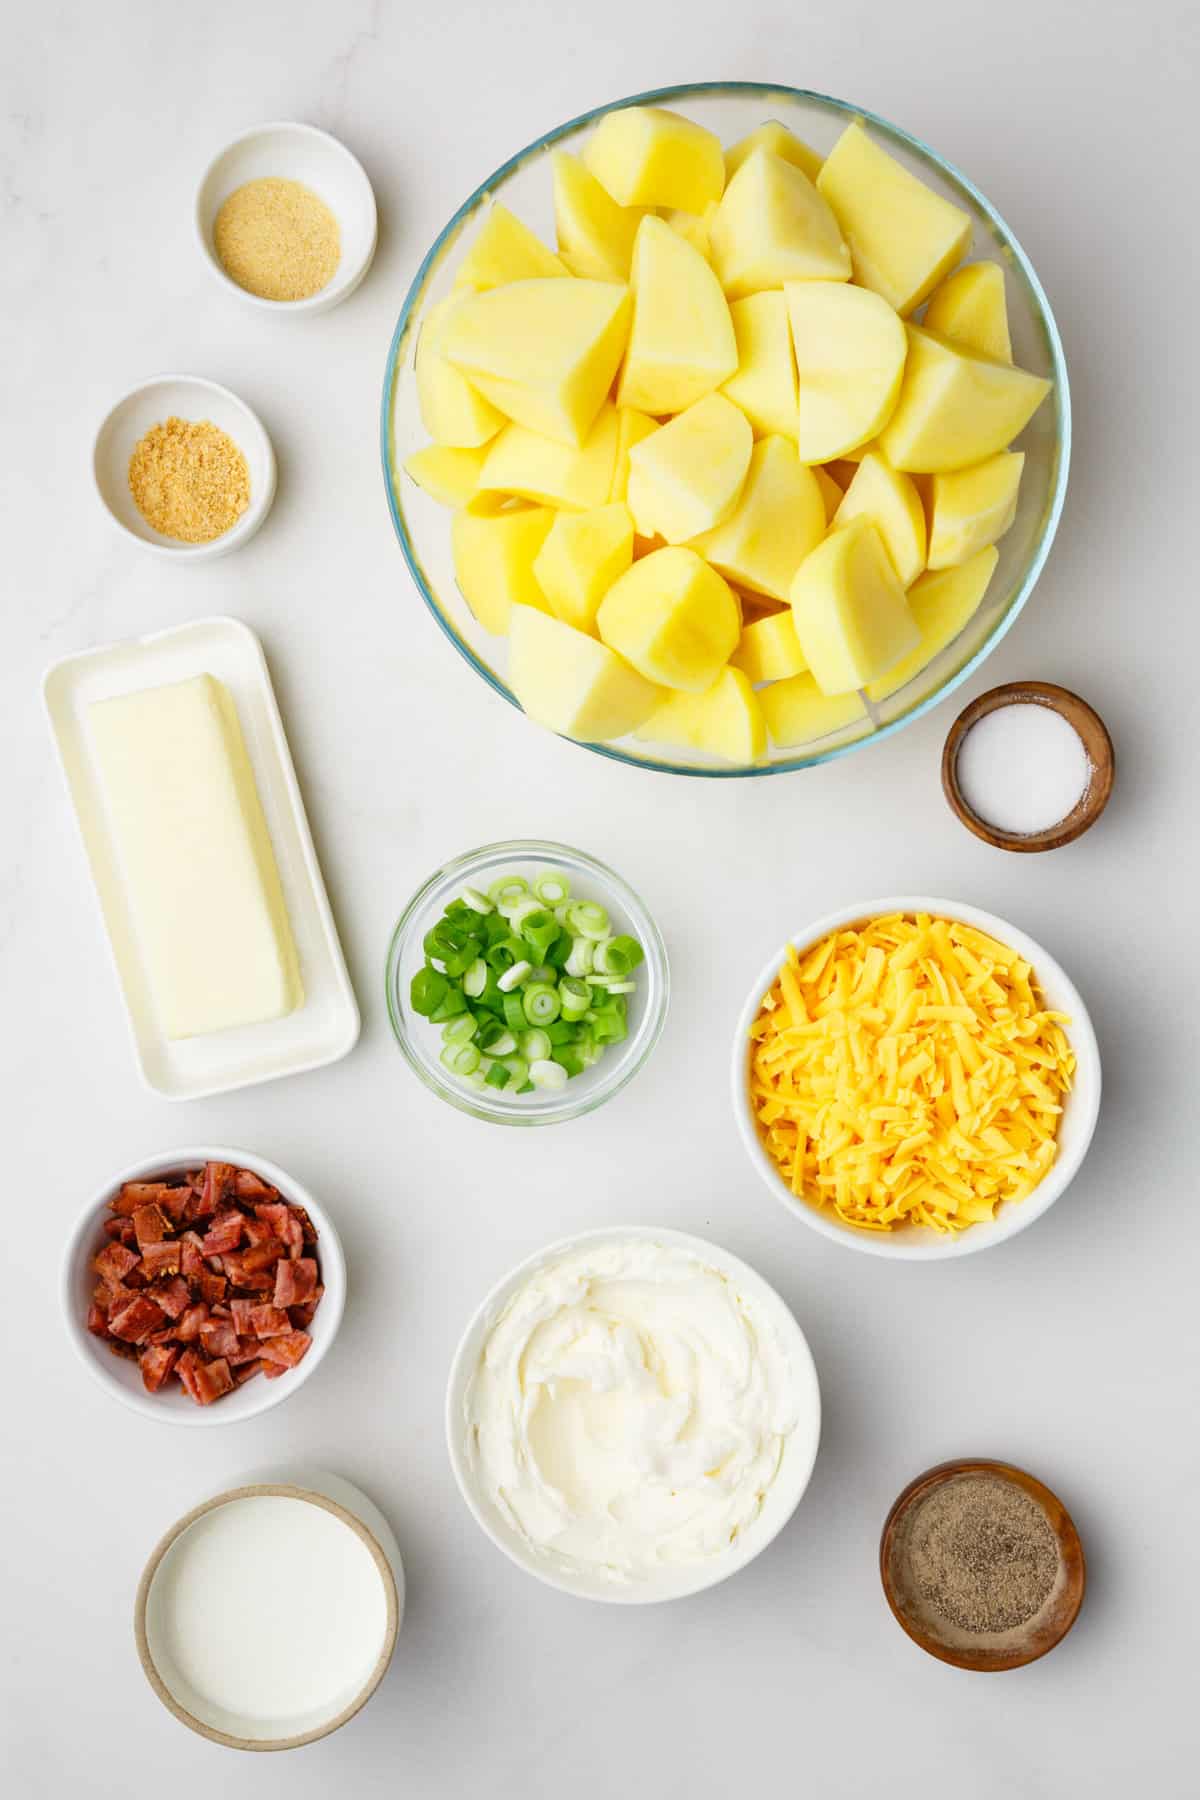 ingredients to make make-ahead mashed potato casserole